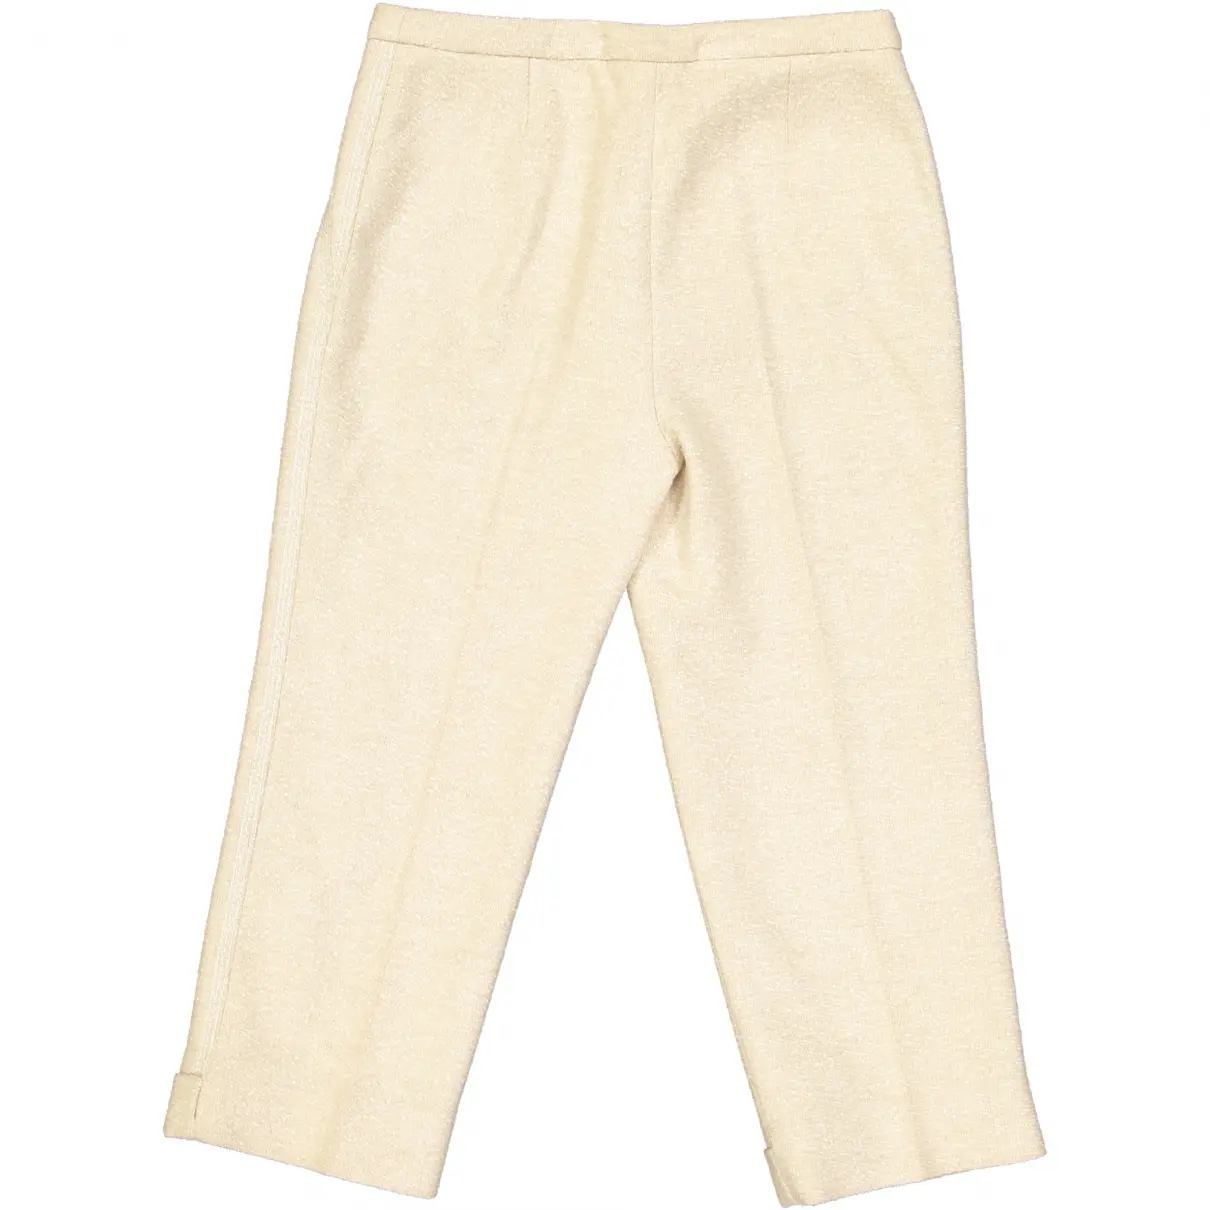 Buy Louis Vuitton Cashmere chino pants online